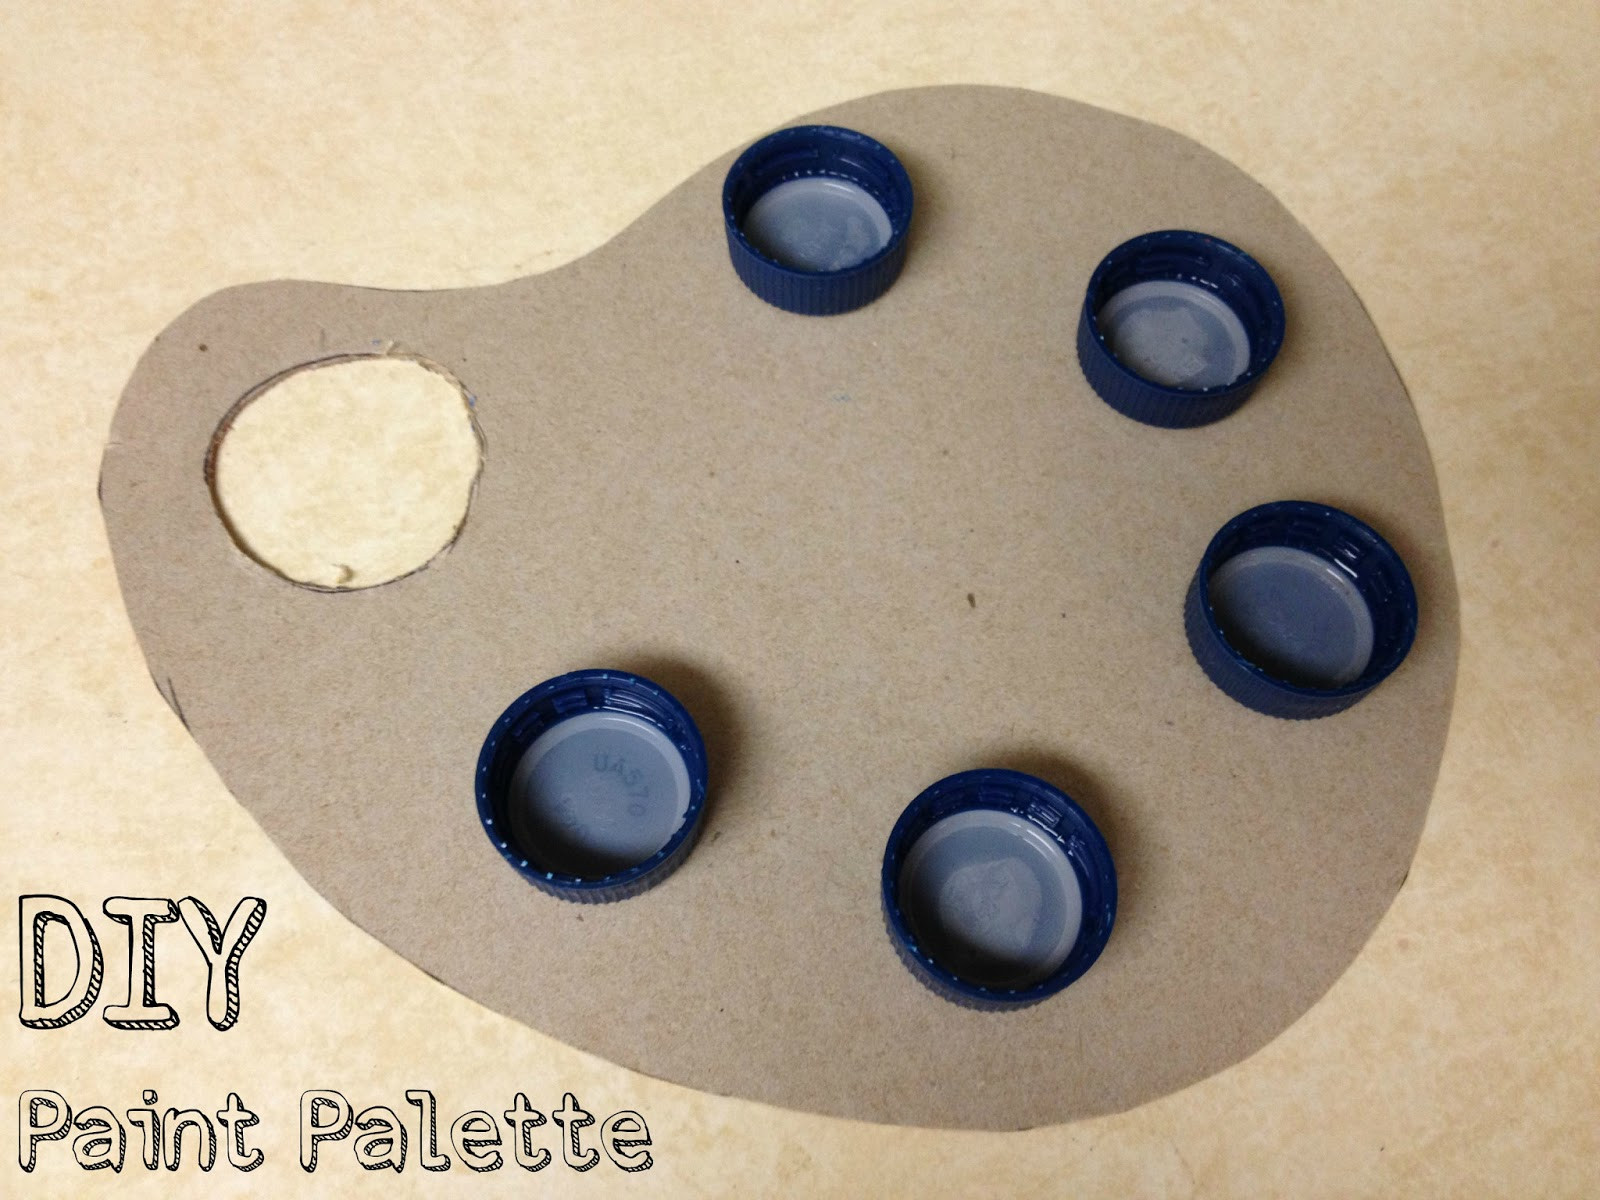 Best ideas about DIY Paint Palette
. Save or Pin Tutus and Tea Parties DIY Paint Palette Now.